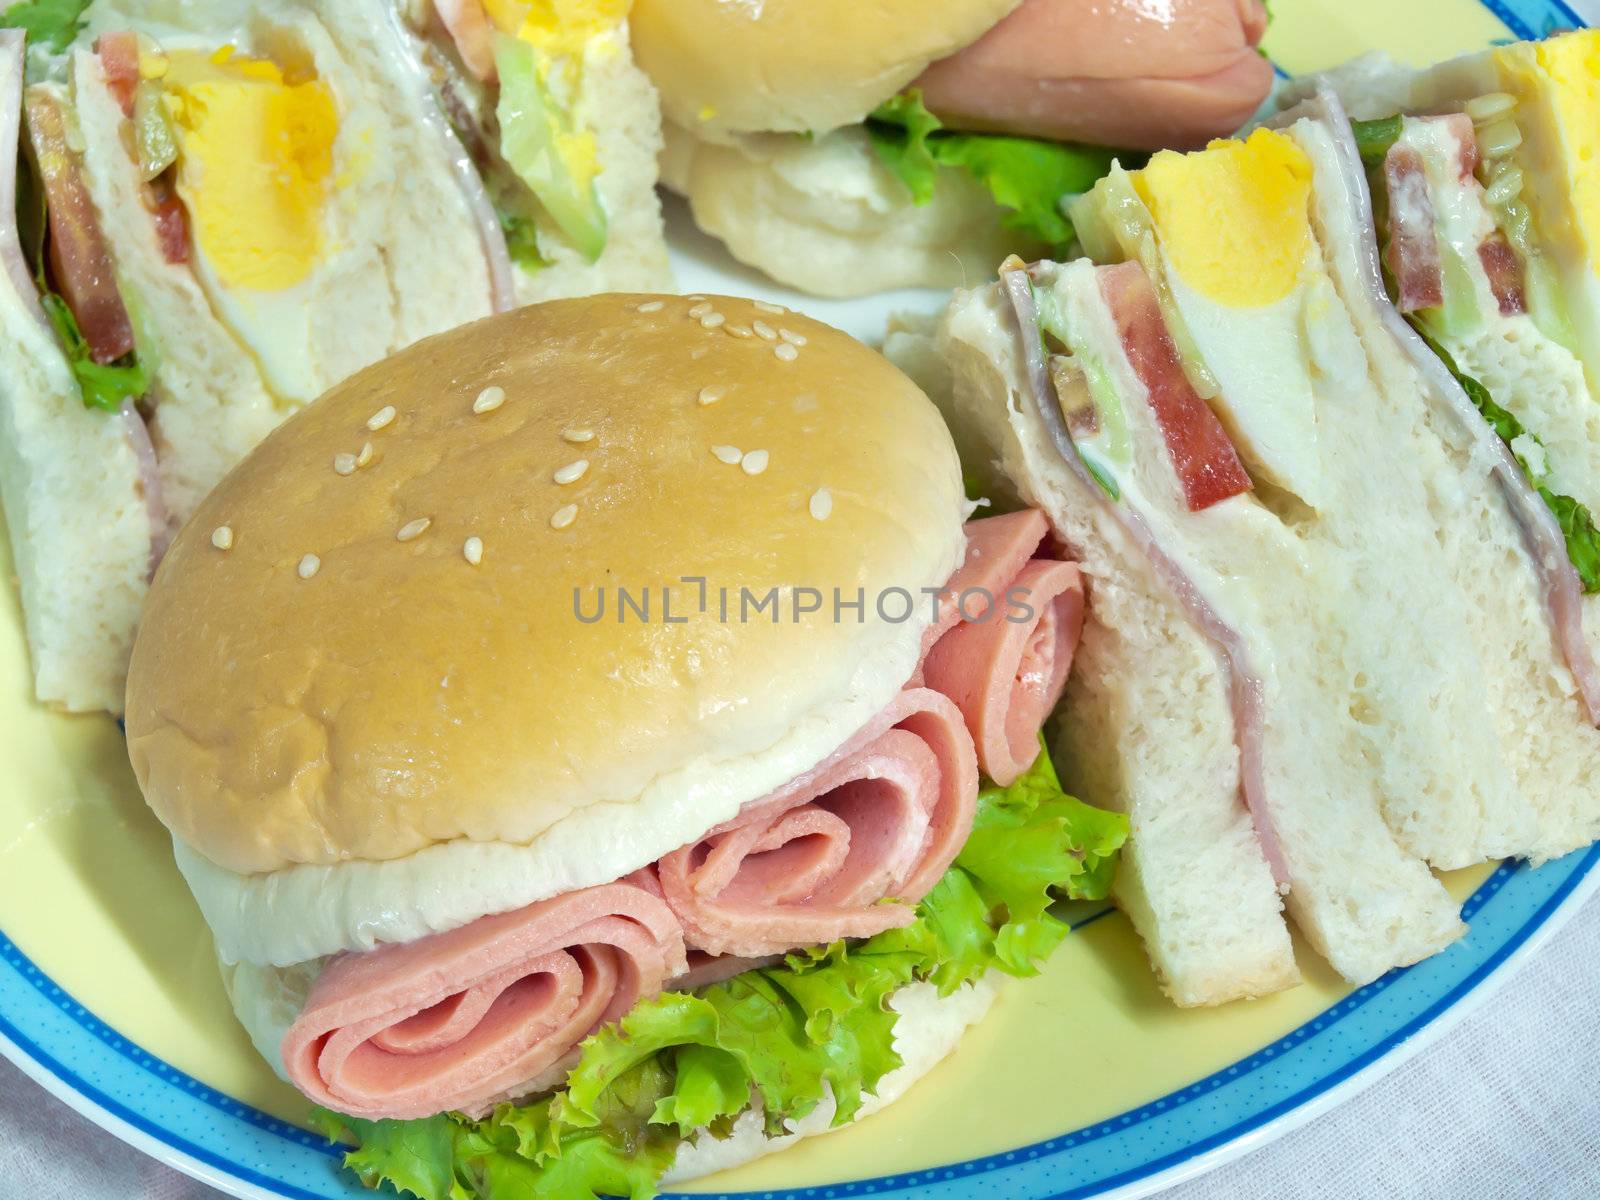 Hamburger with sandwich by Exsodus